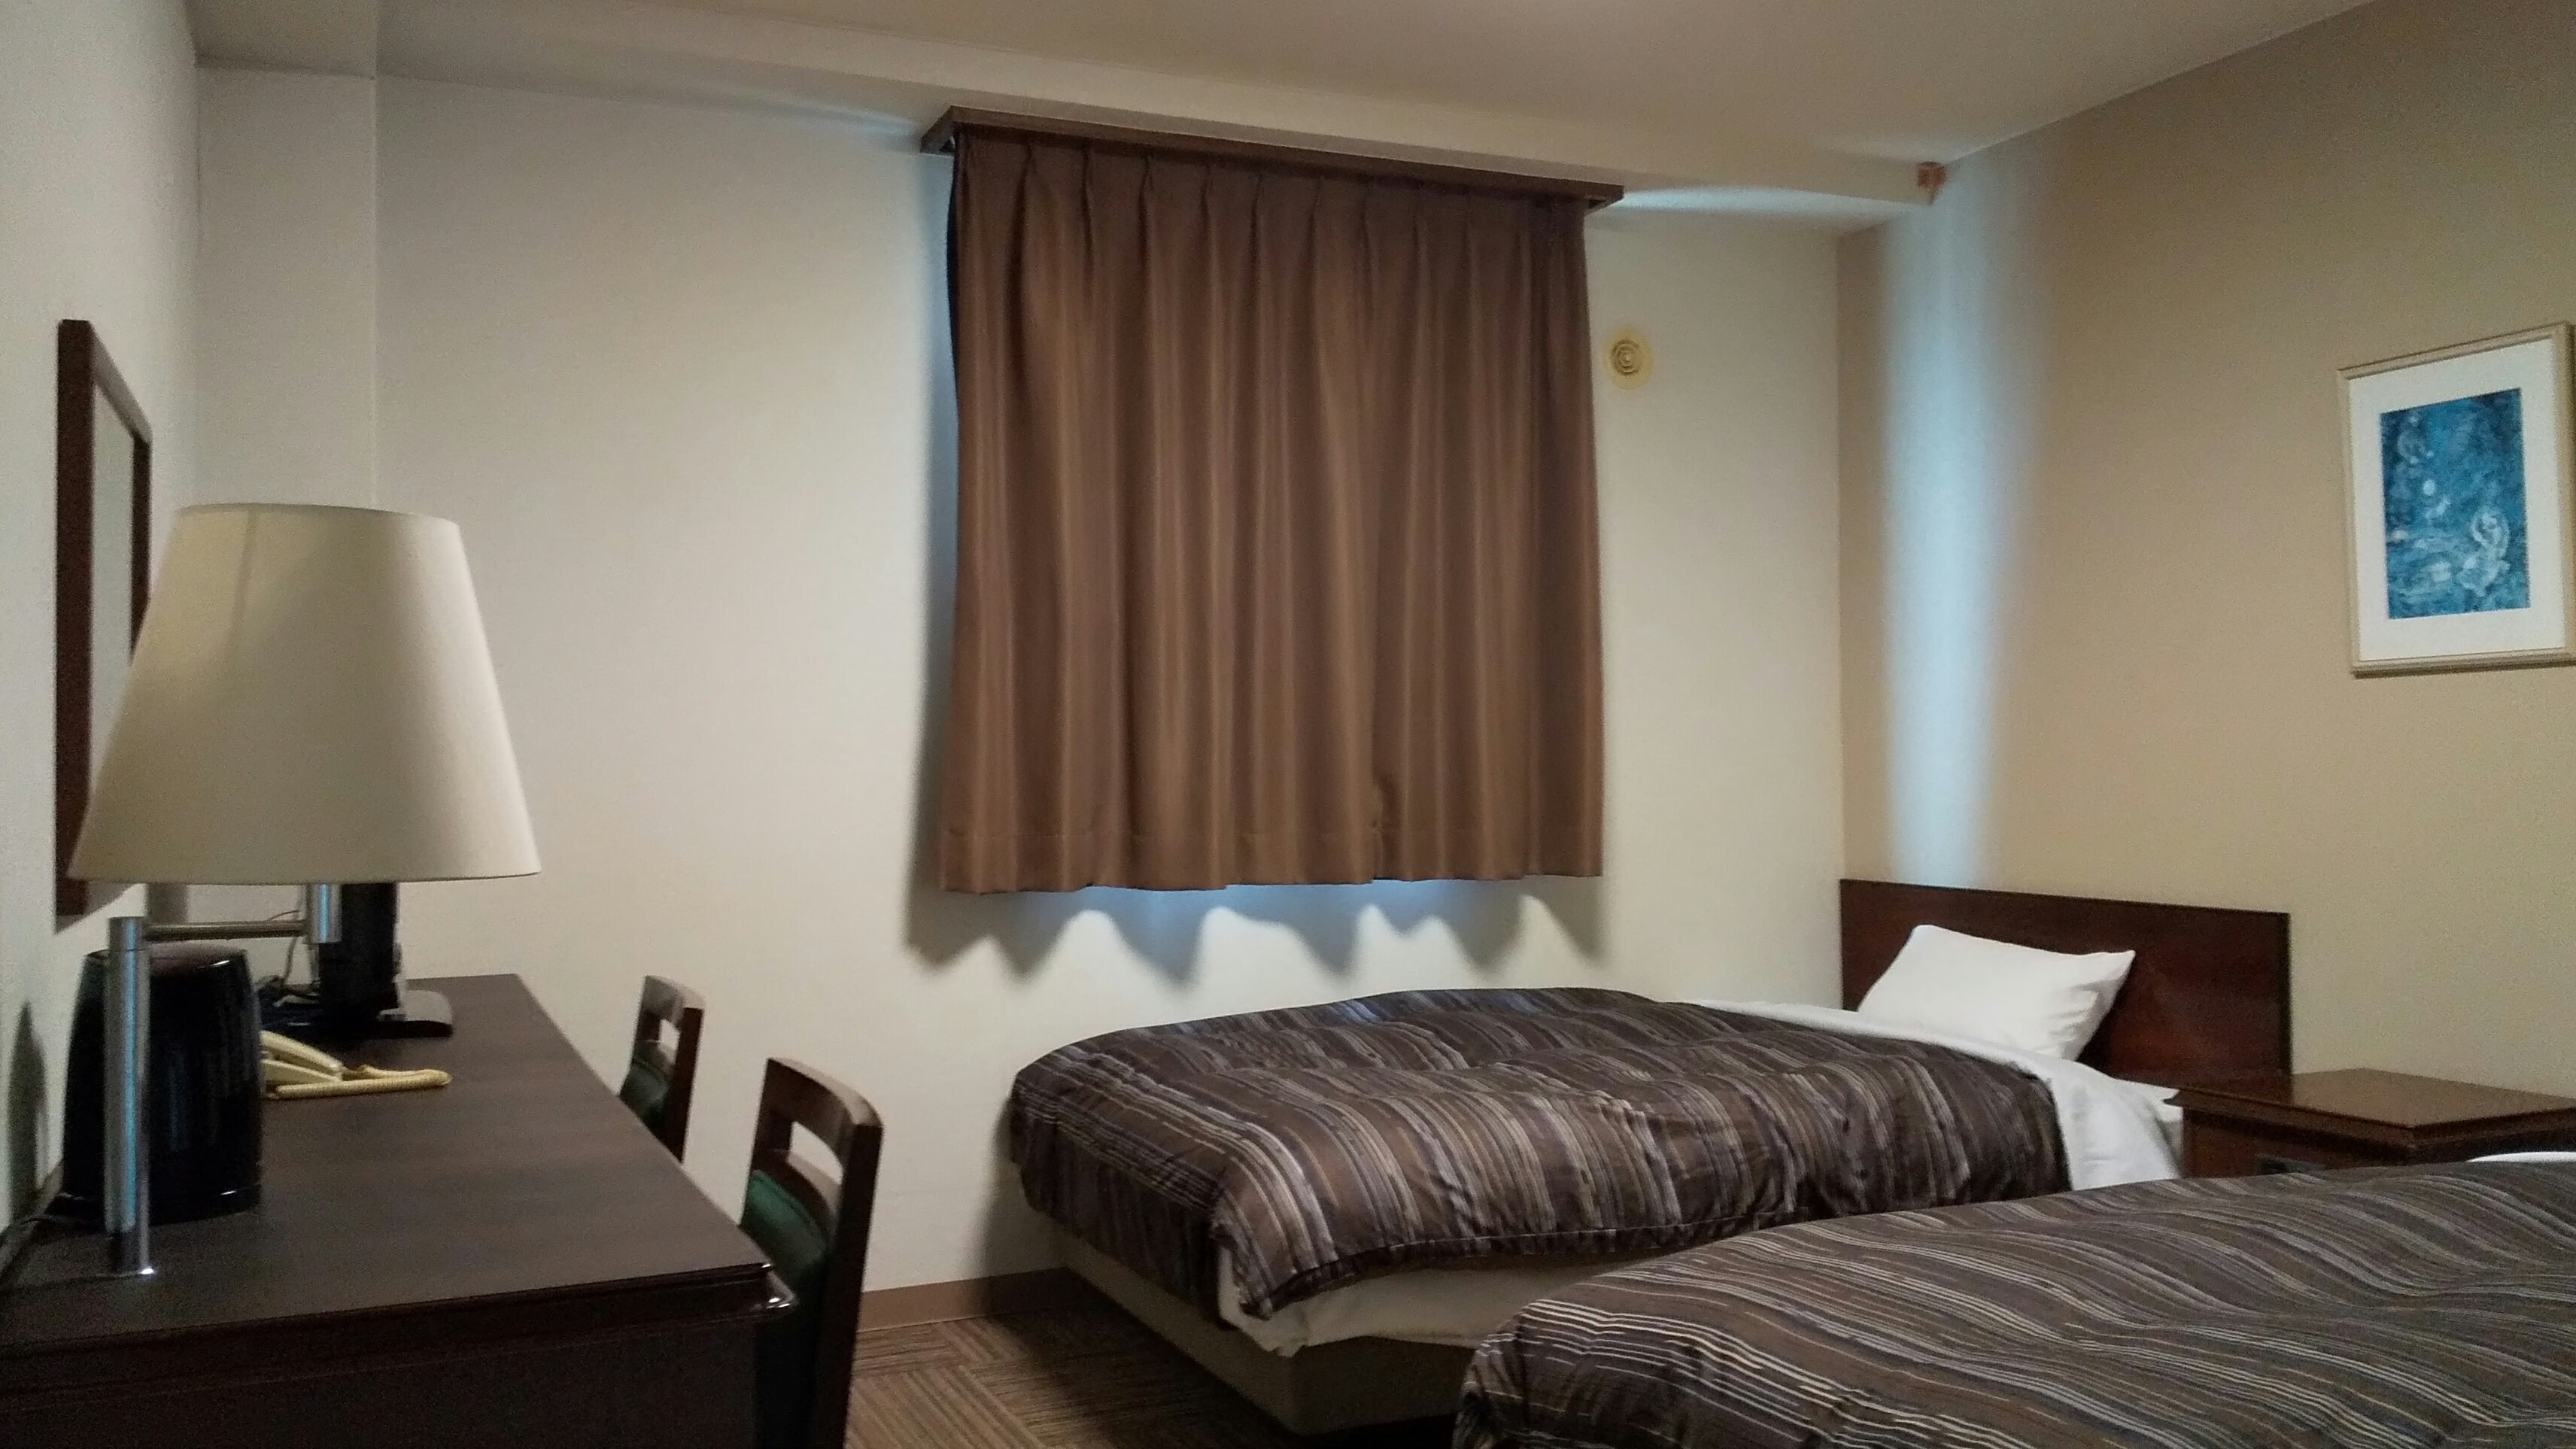 Tempat tidur kamar twin ukuran 120cm & kali; 196cm